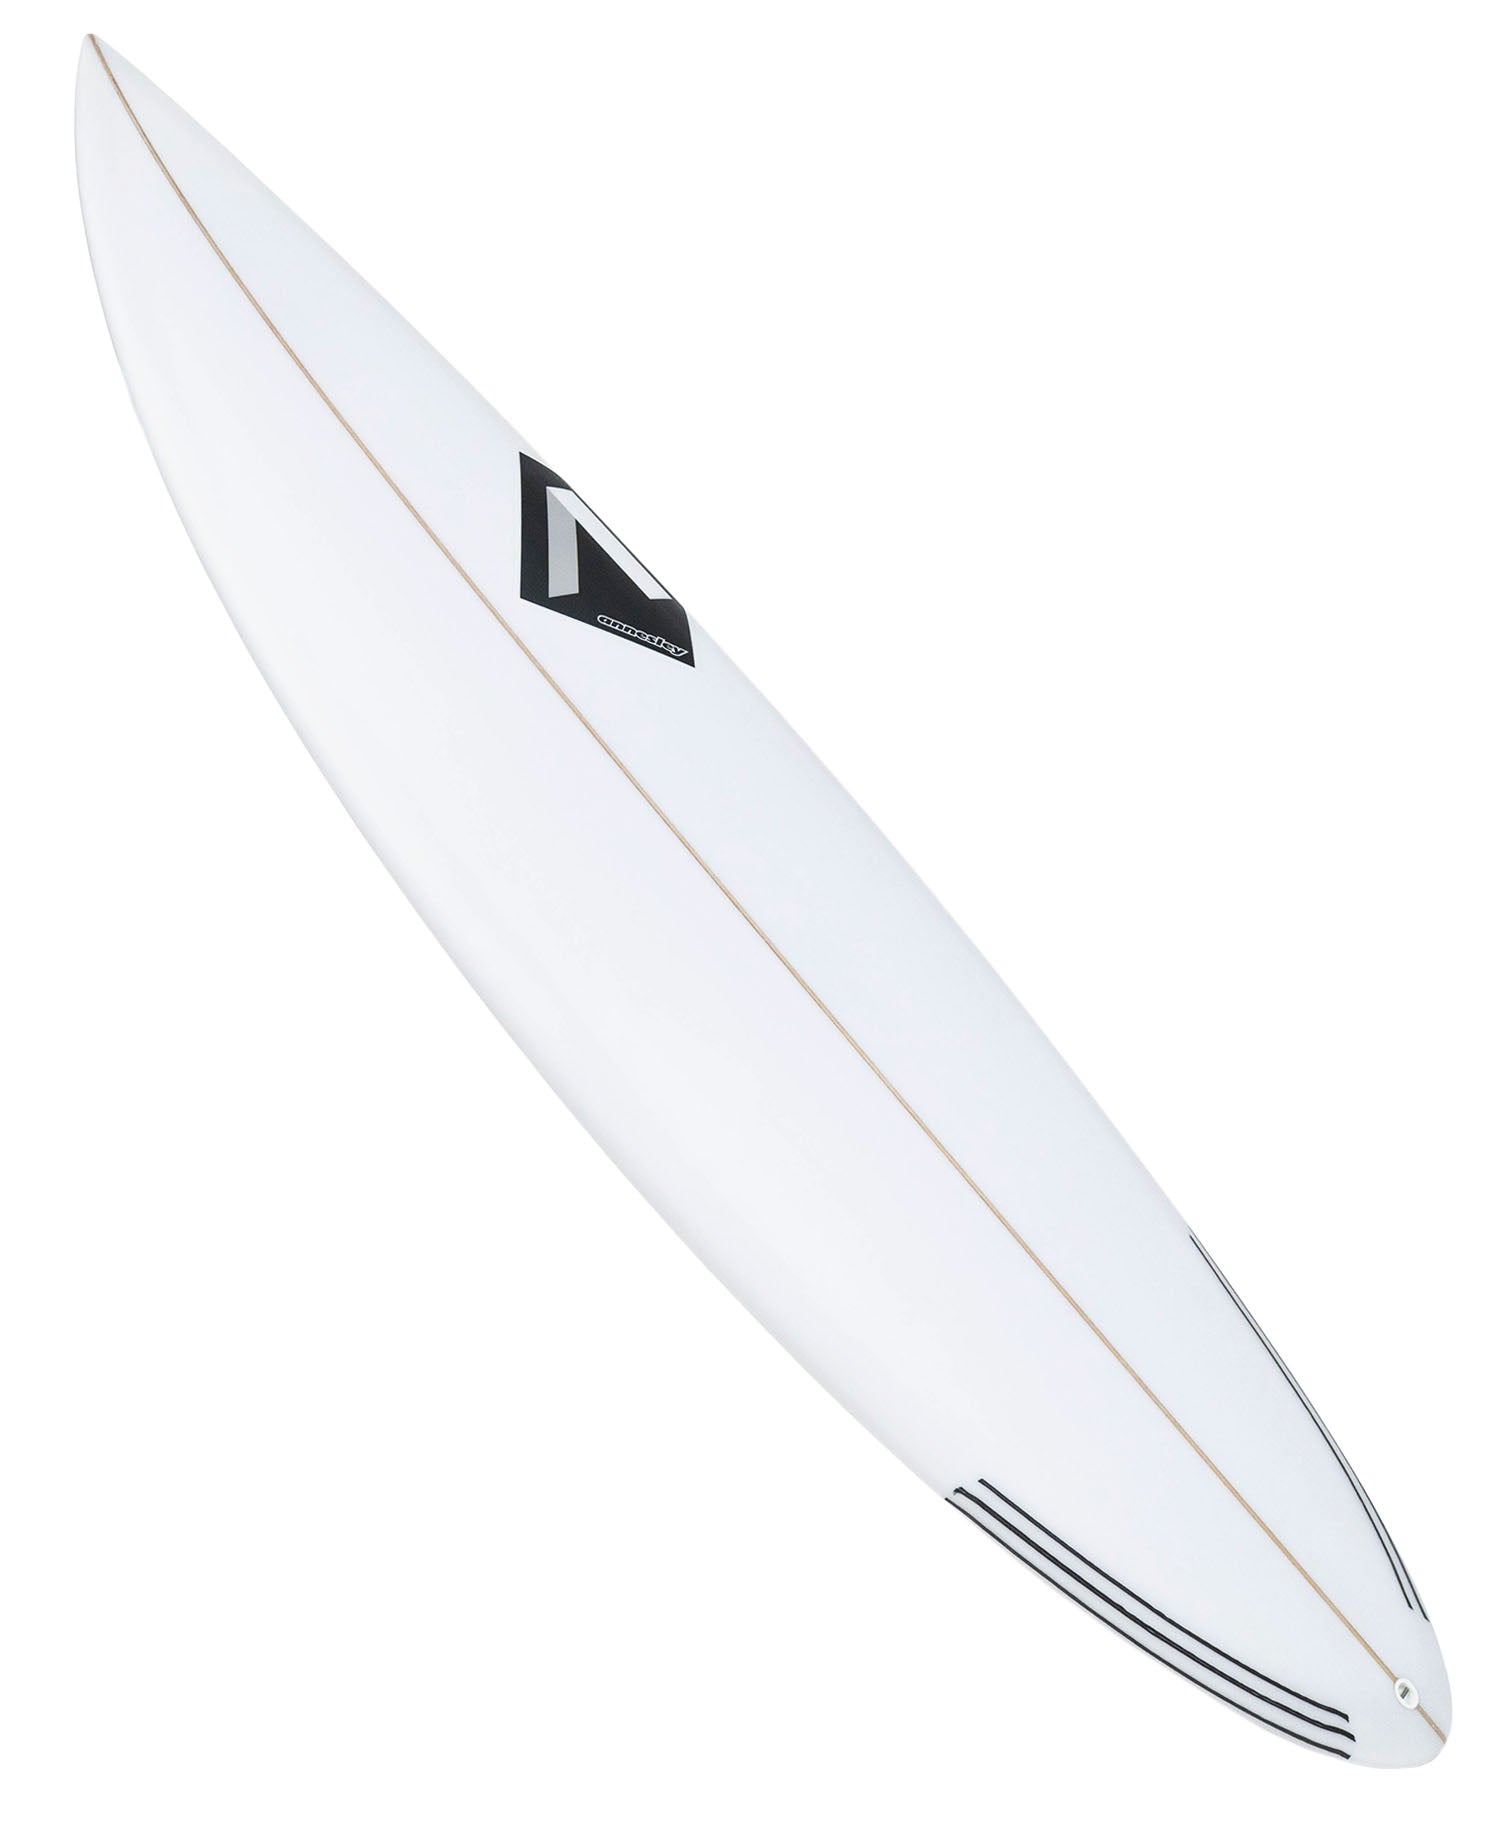 ANNESLEY '11x ' PERFORMANCE SURFBOARD